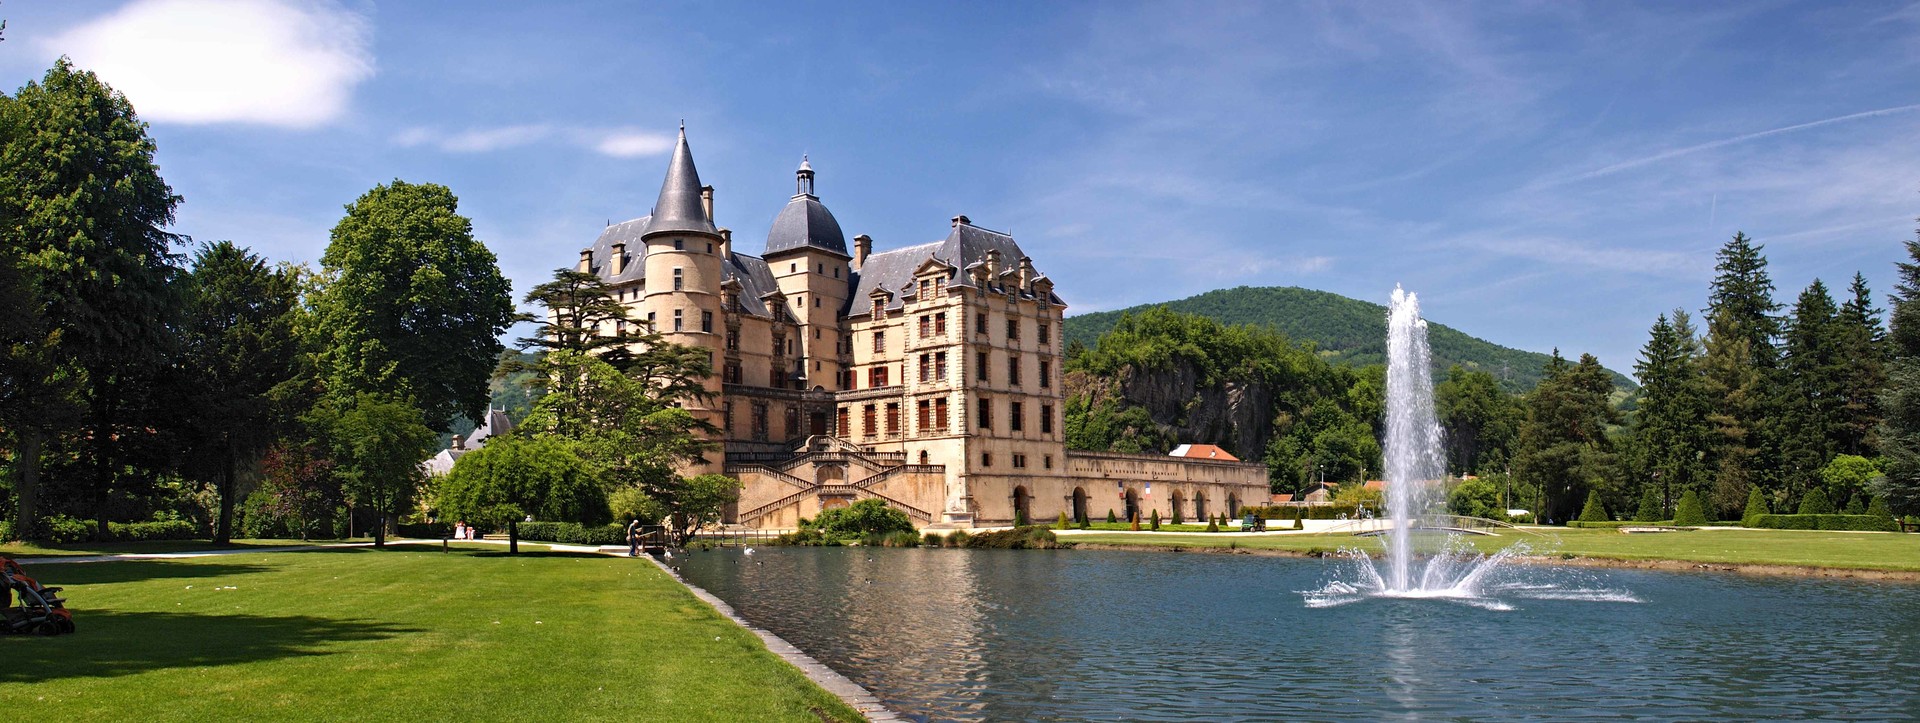 Chateau de Vizille, Isere, France бесплатно